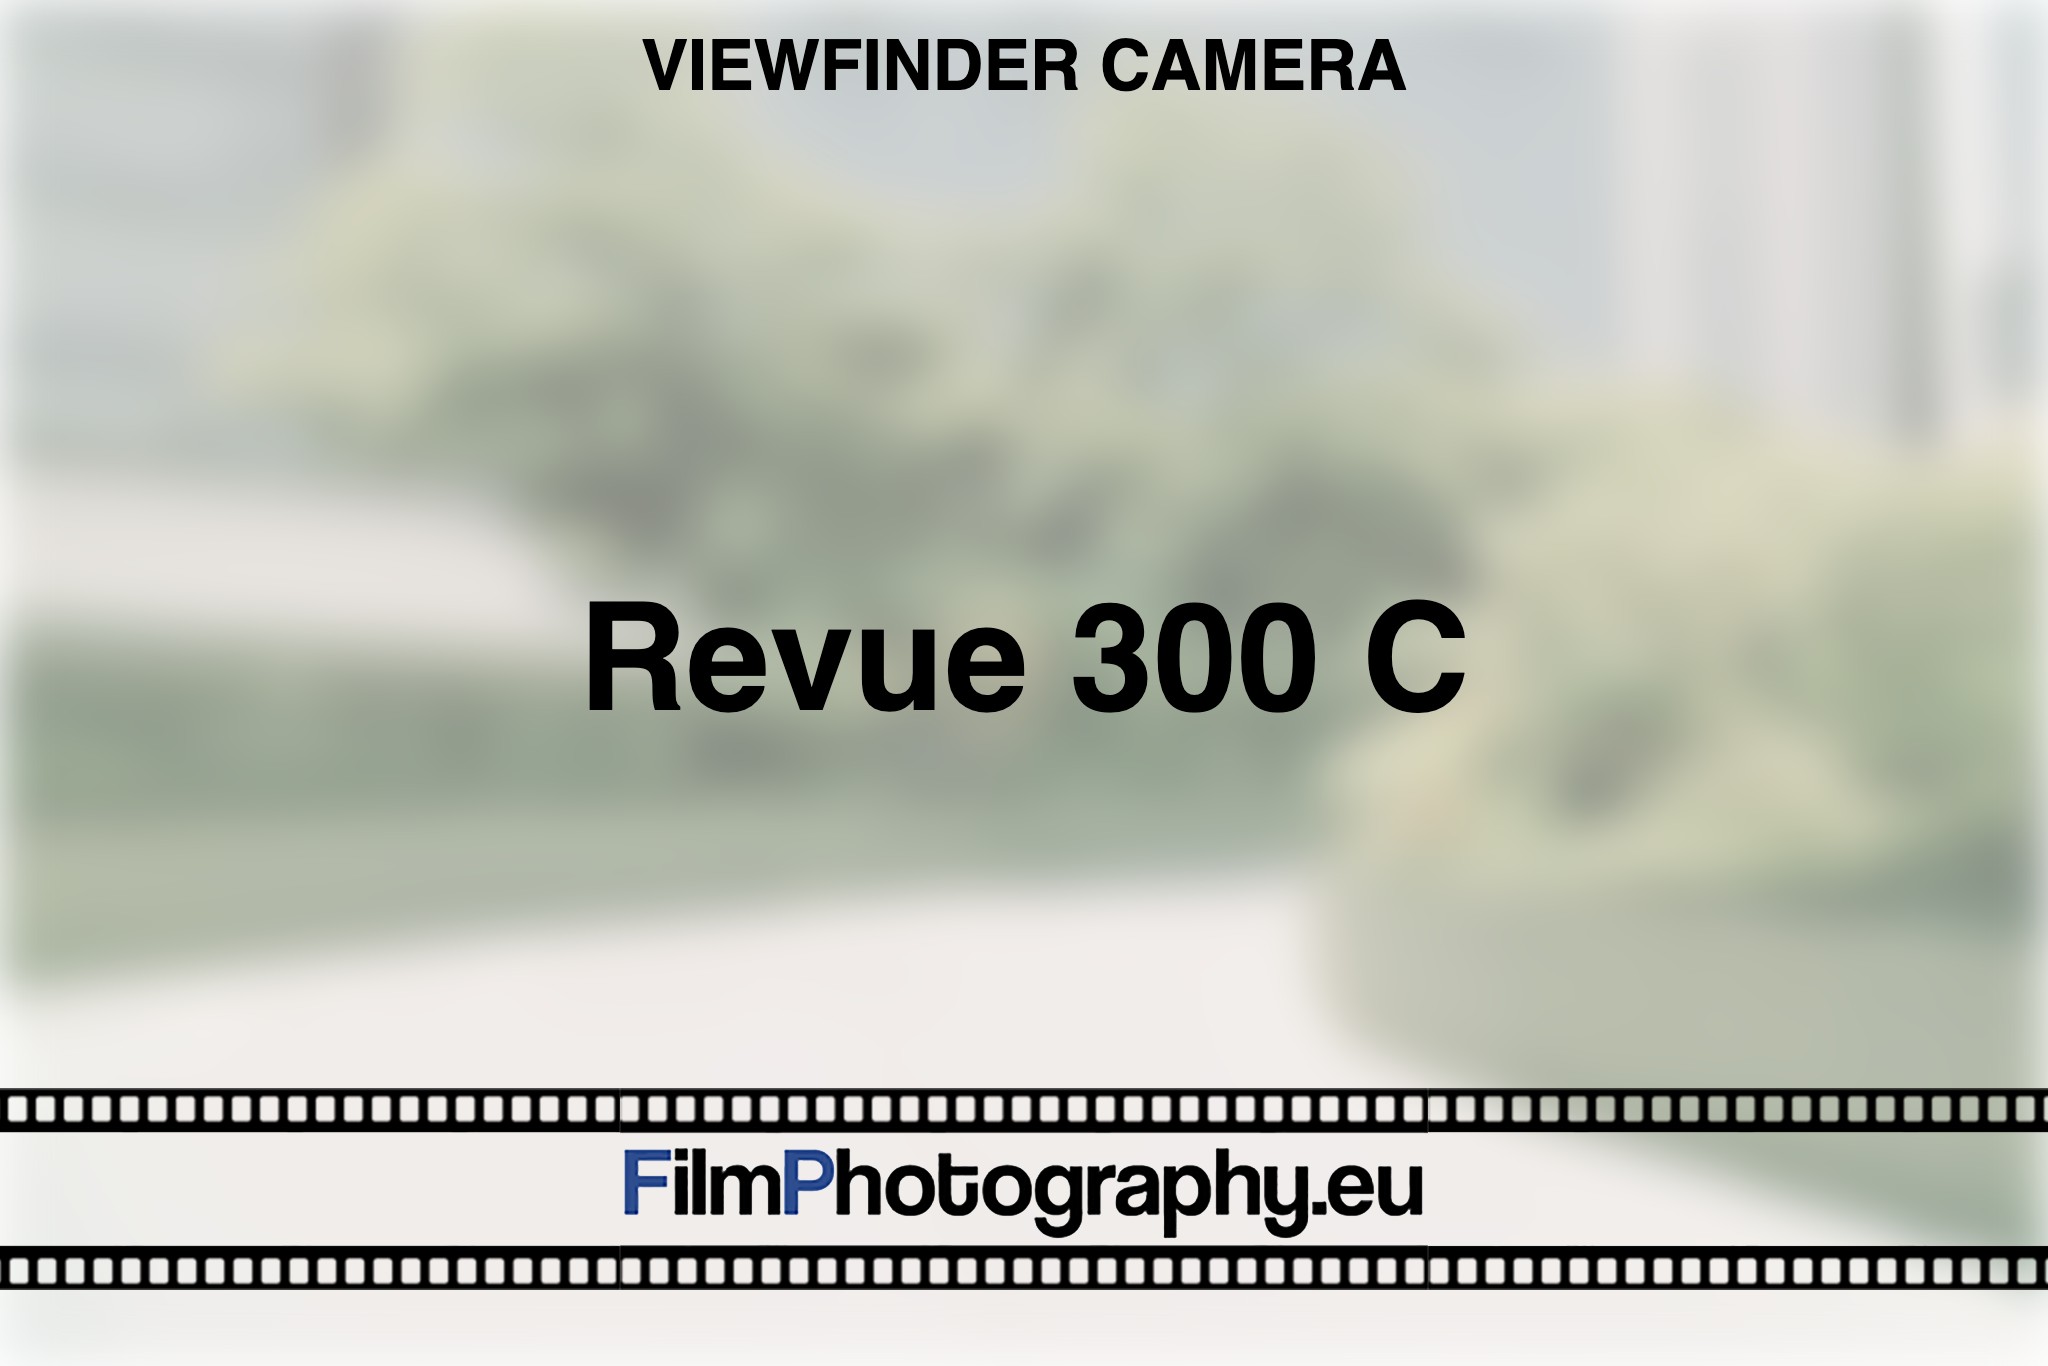 revue-300-c-viewfinder-camera-bnv